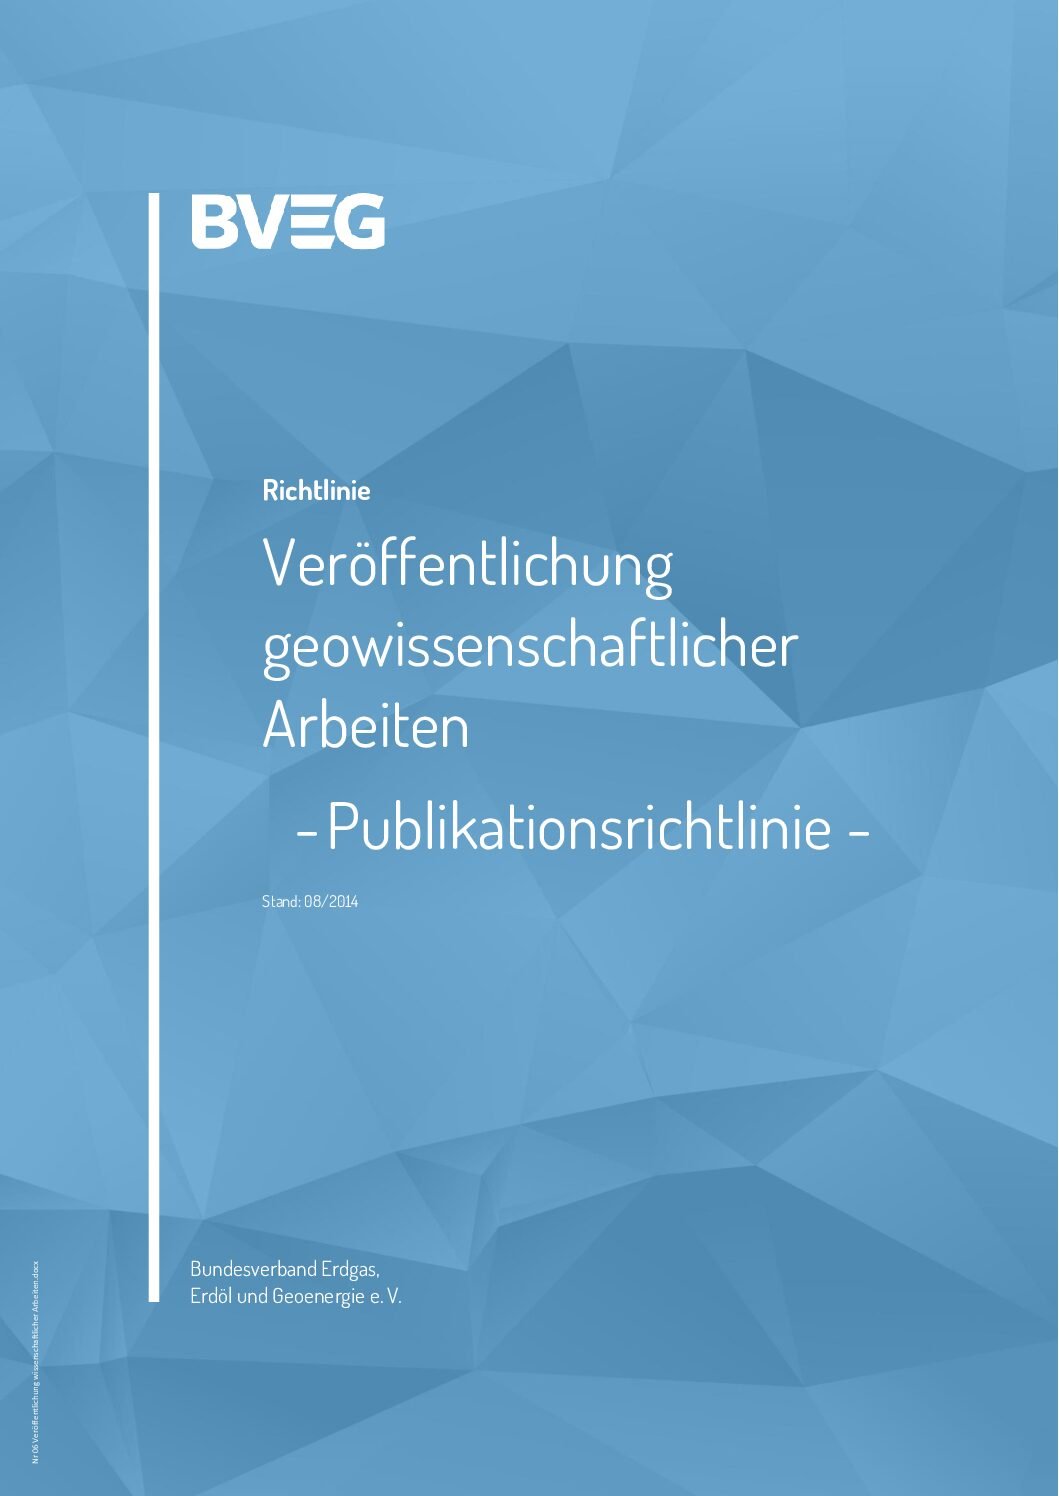 BVEG Publikationsrichtlinie